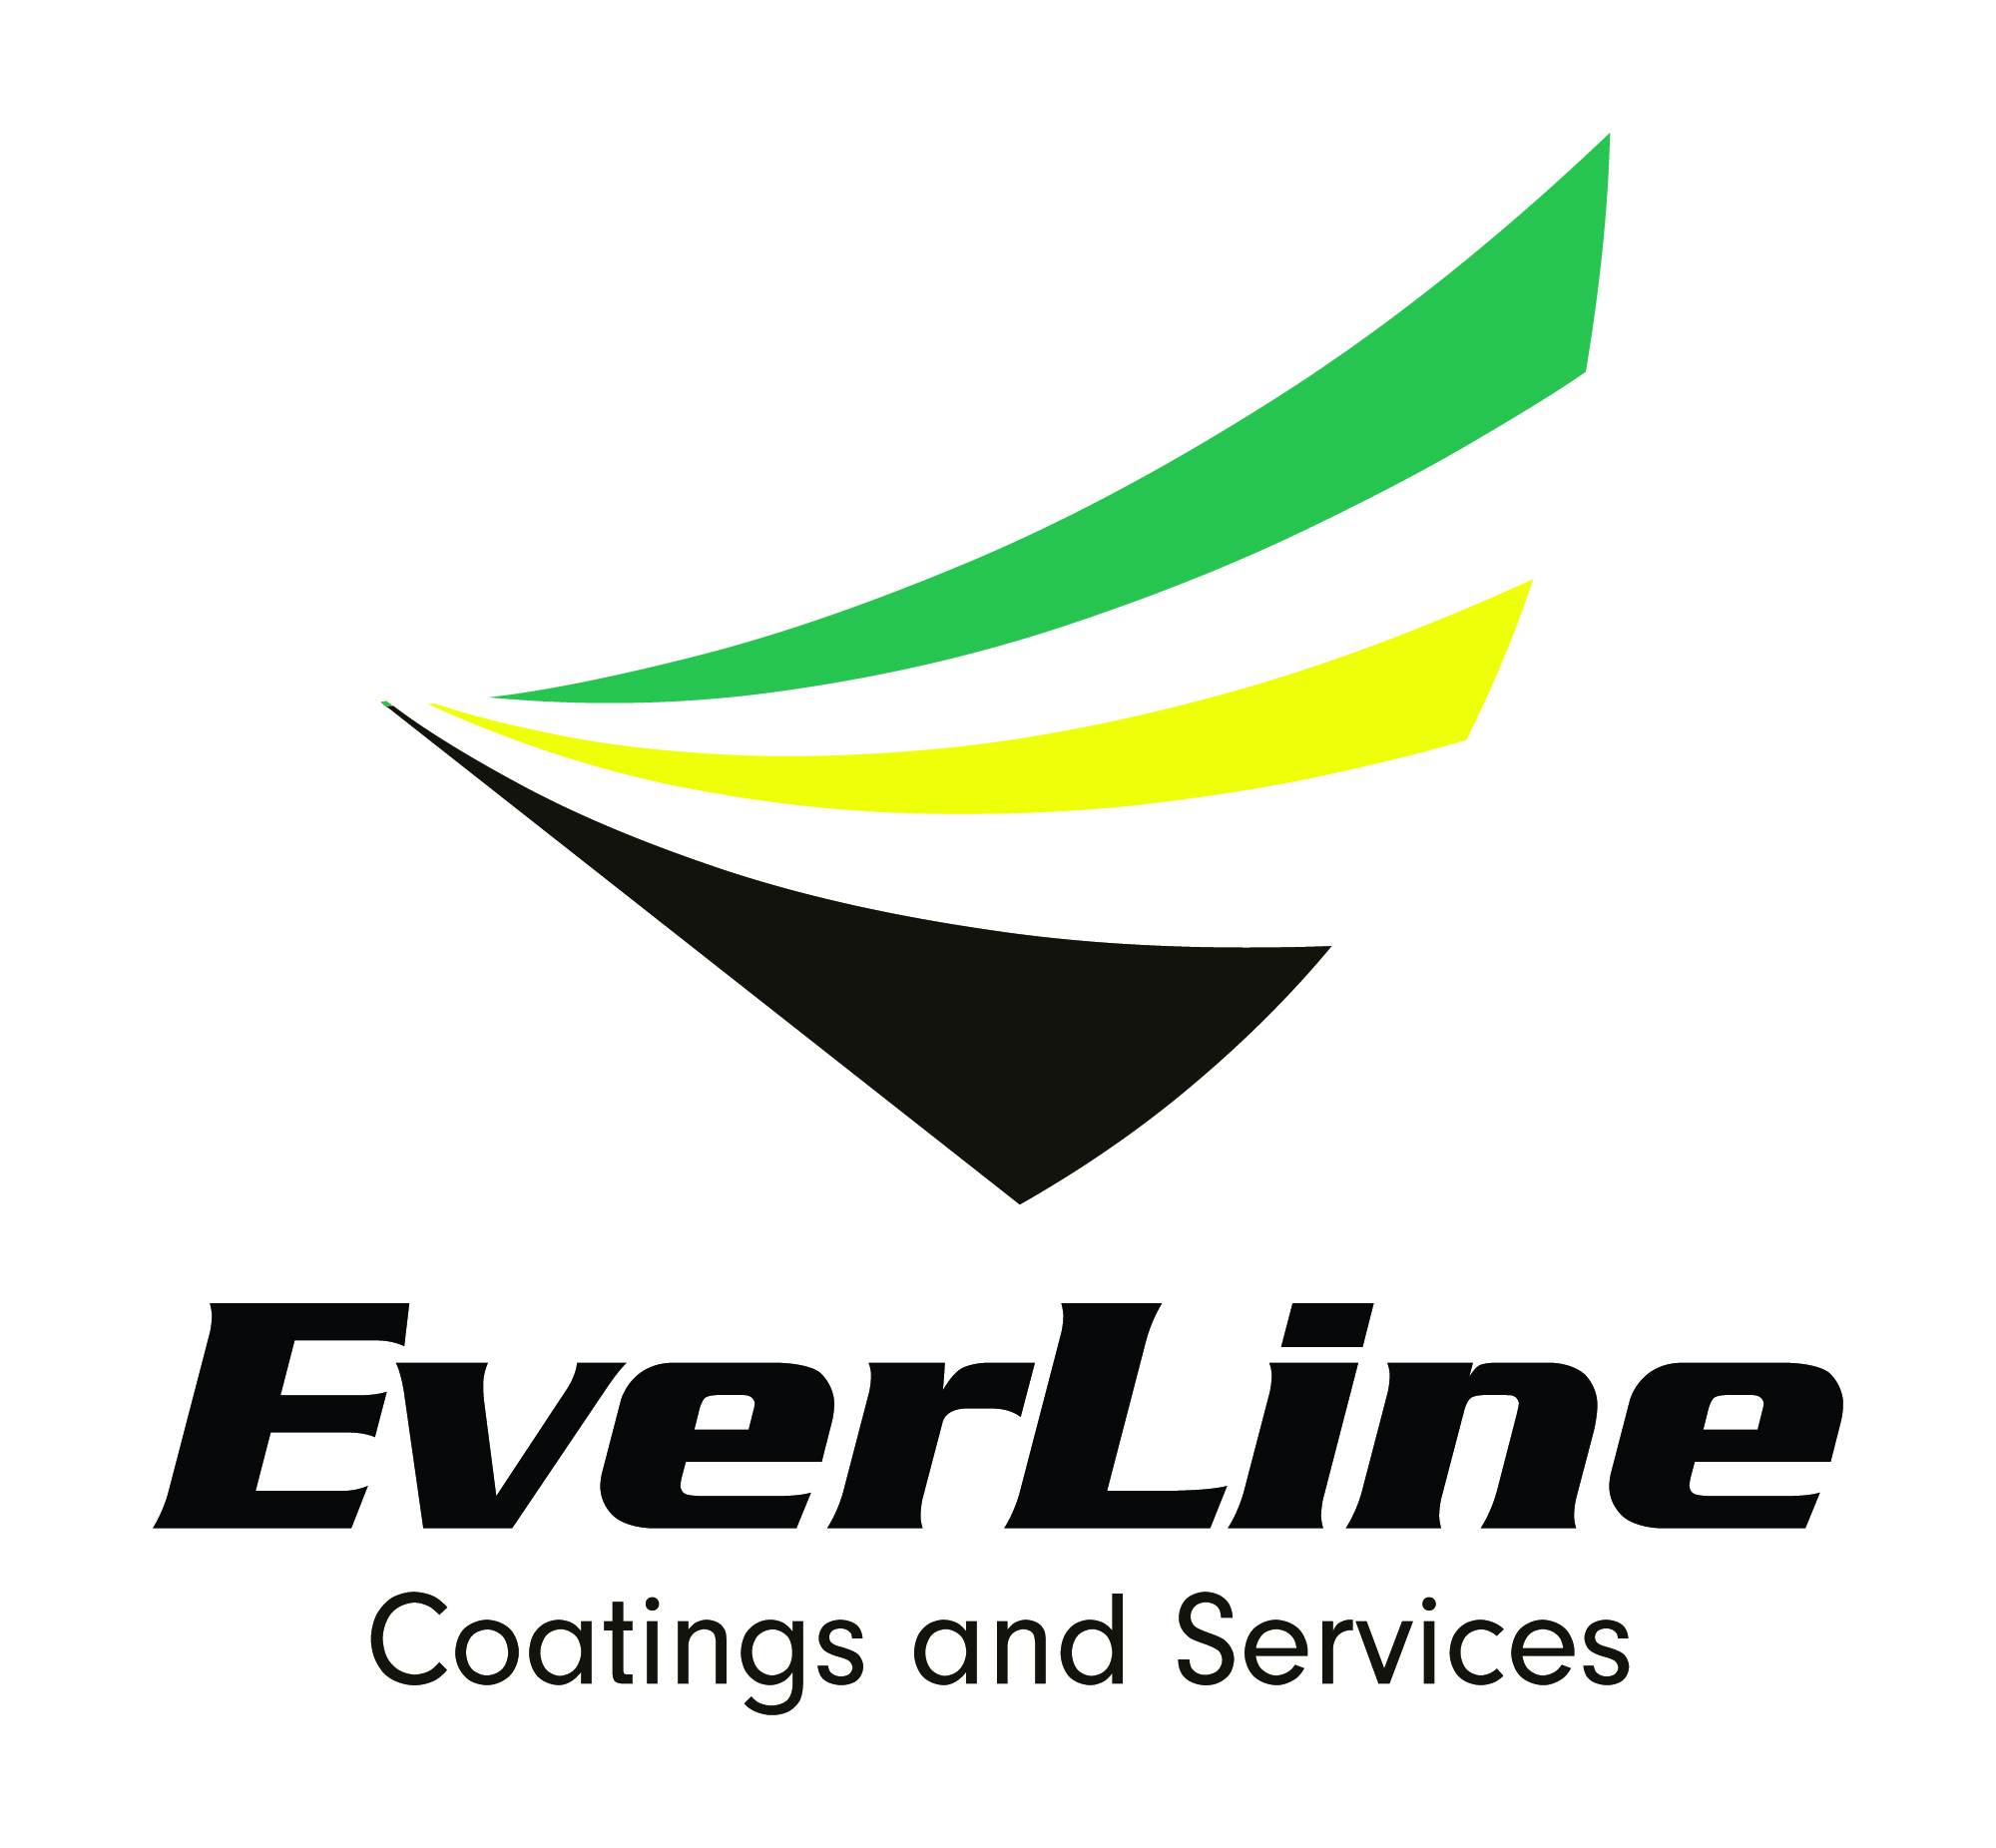 Everline Coating And Services SW/SE Logo